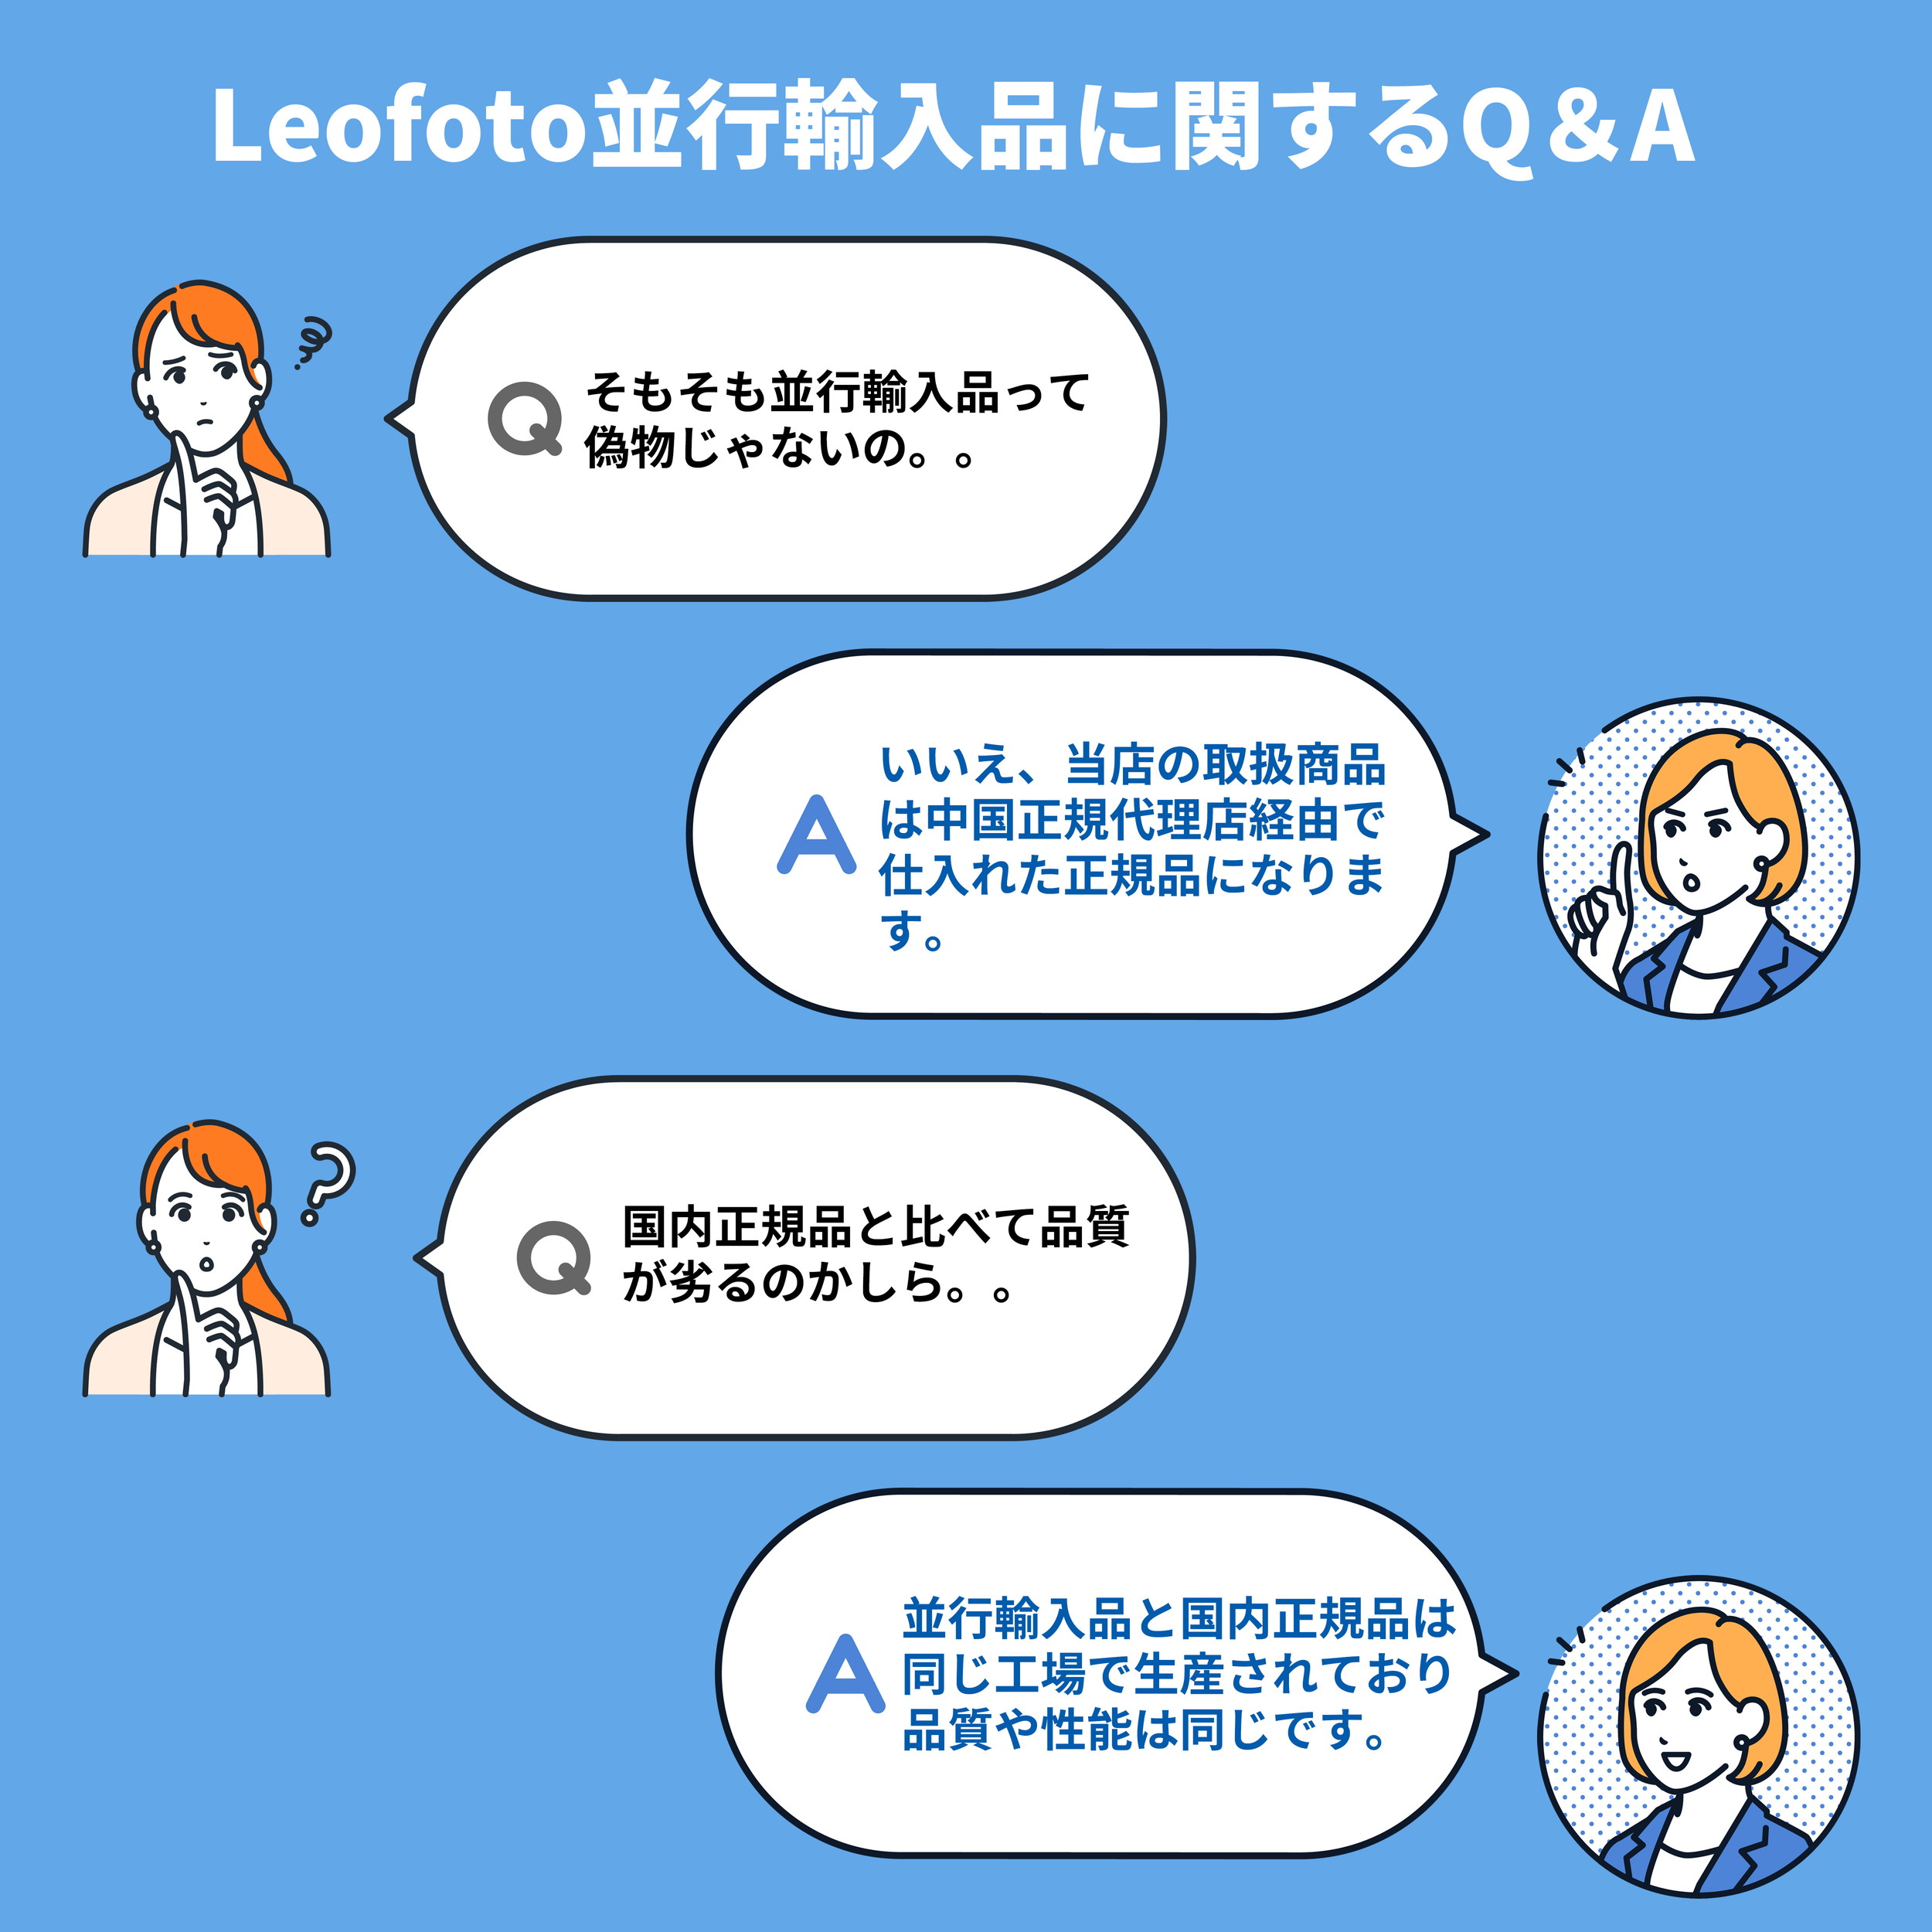 Leofoto G2+NP-60 ギア雲台 [並行輸入品] : 2020-leofoto-g2 : カメラ 